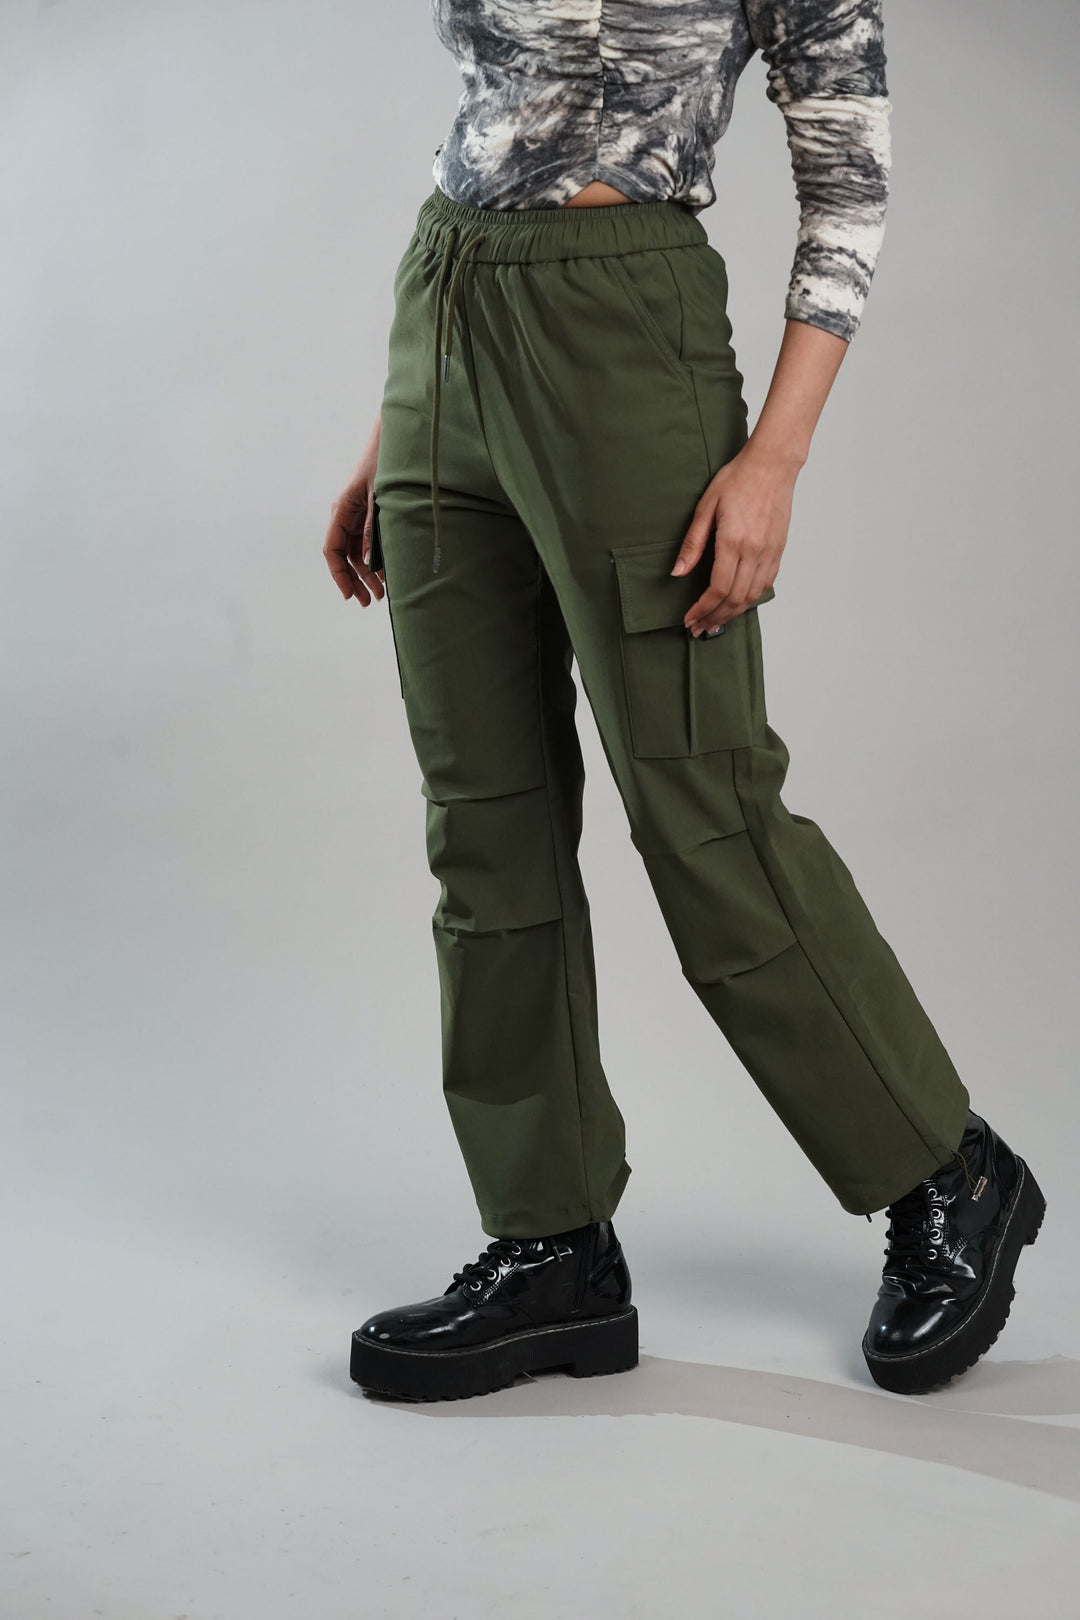 Versatile dark green cargo pants for urban style